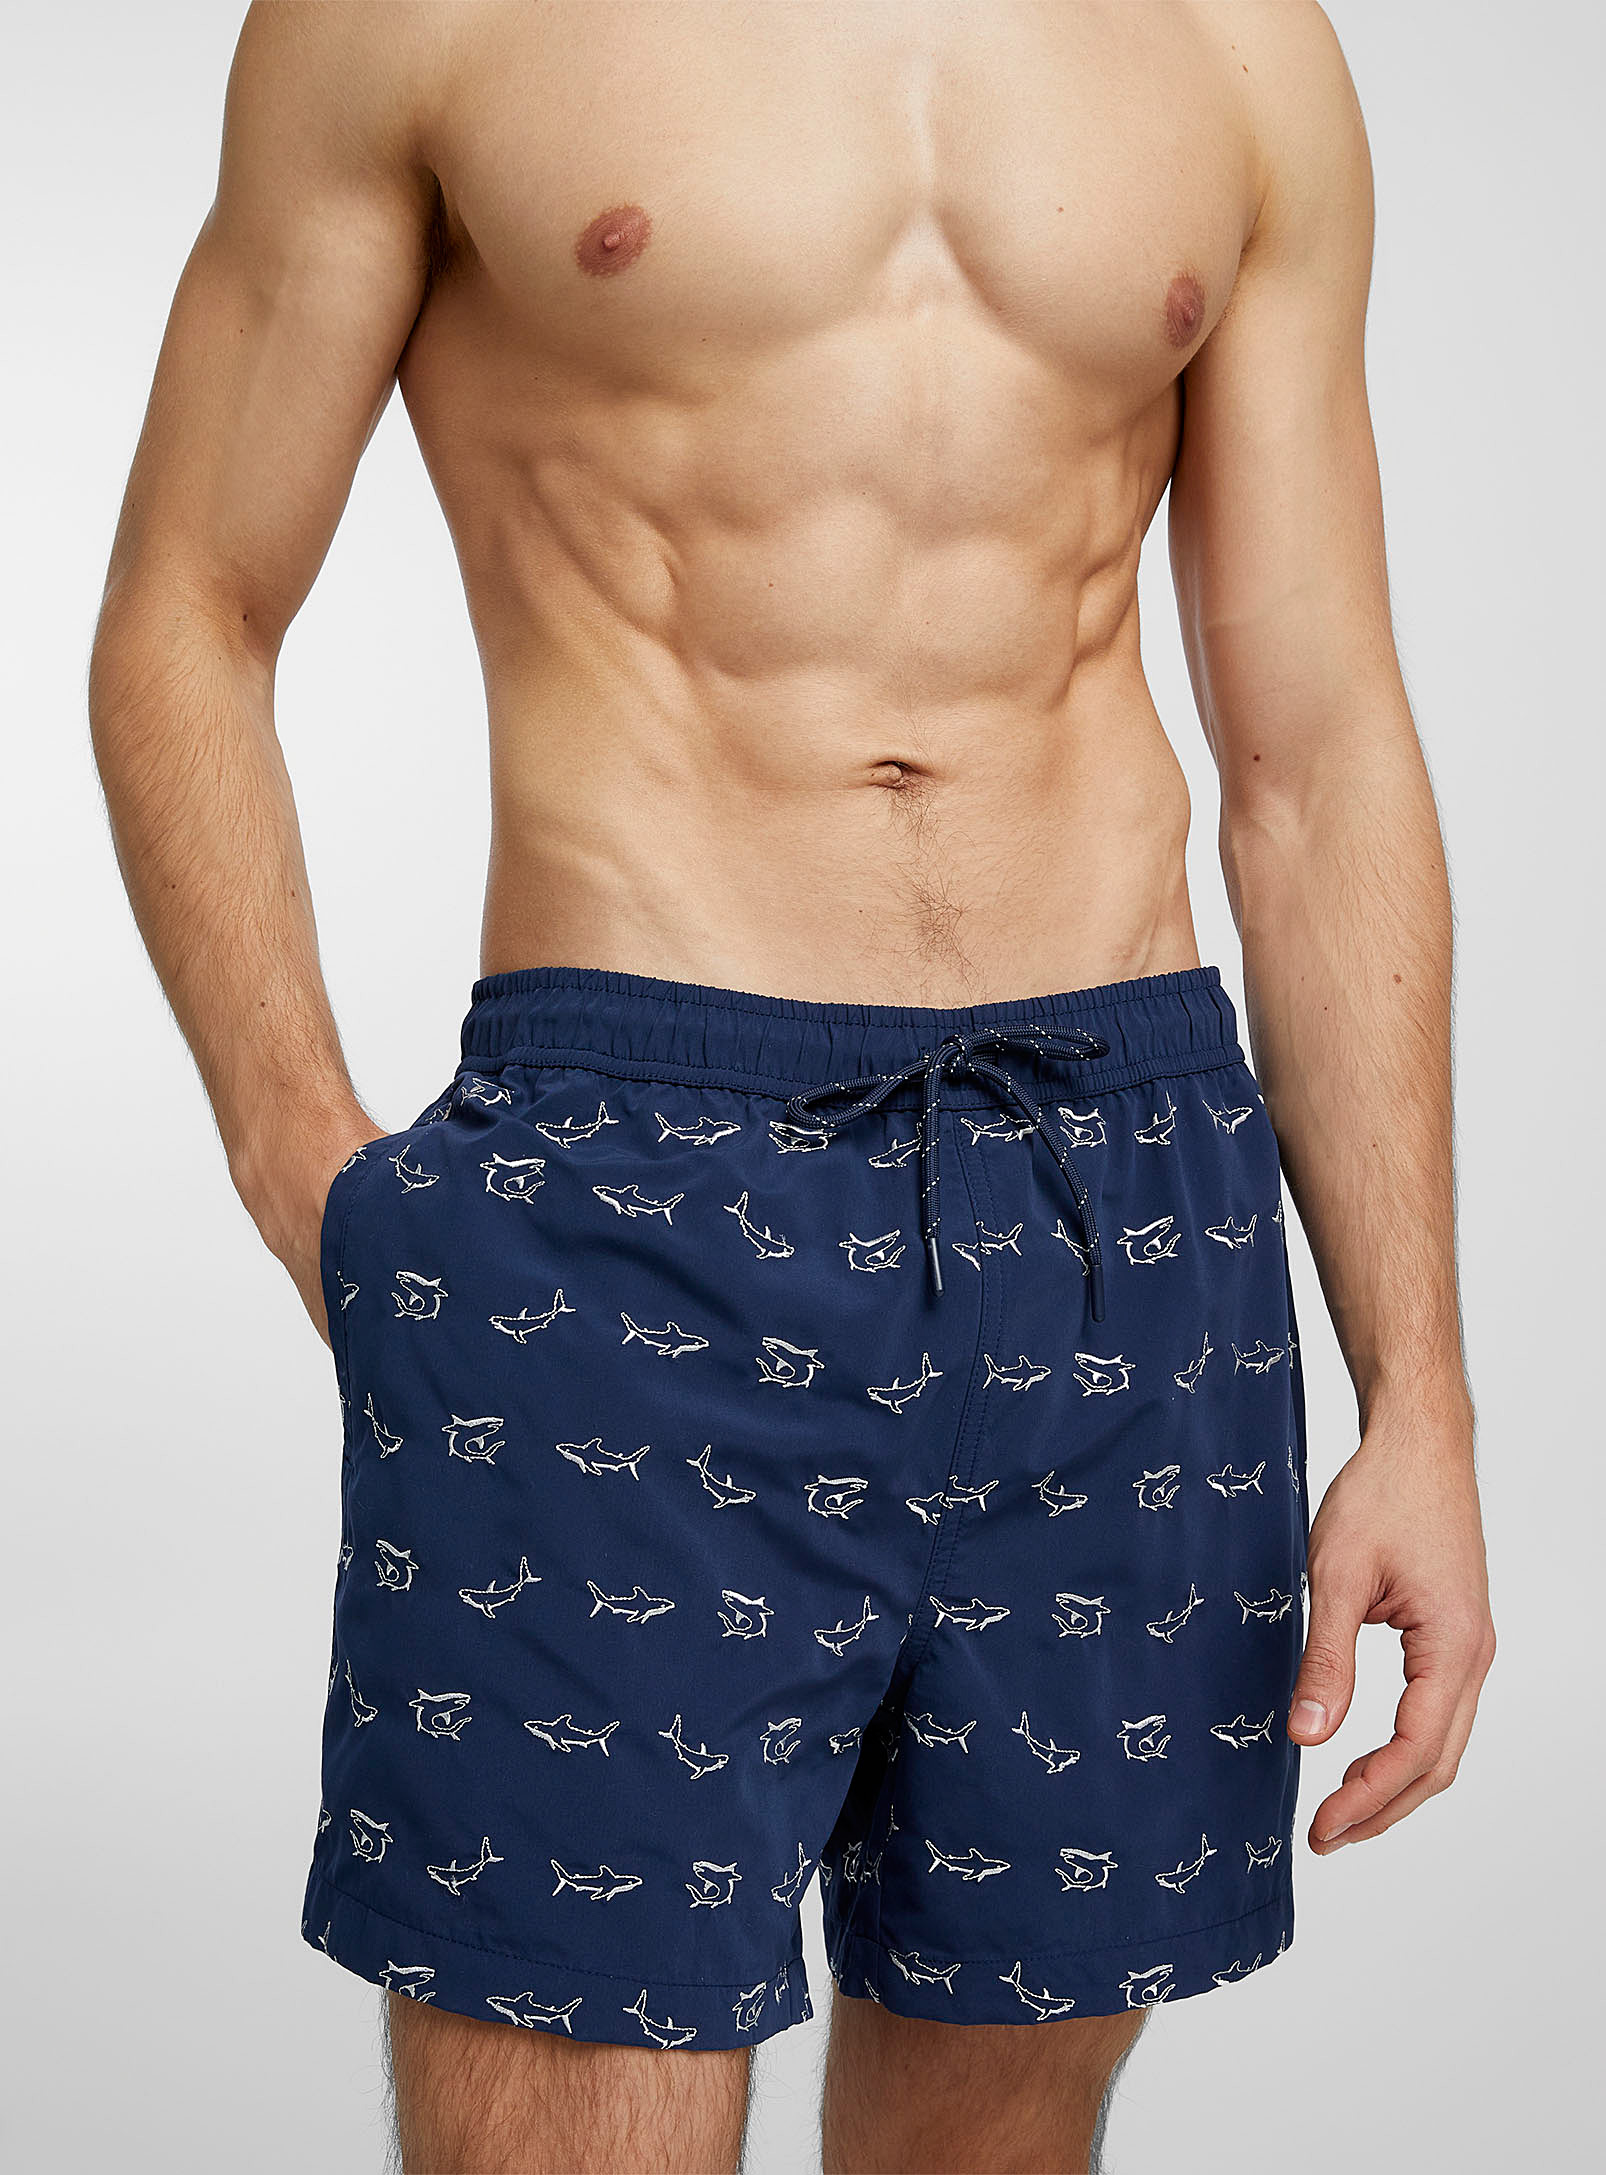 I.FIV5 - Men's Embroidered shark swim trunk